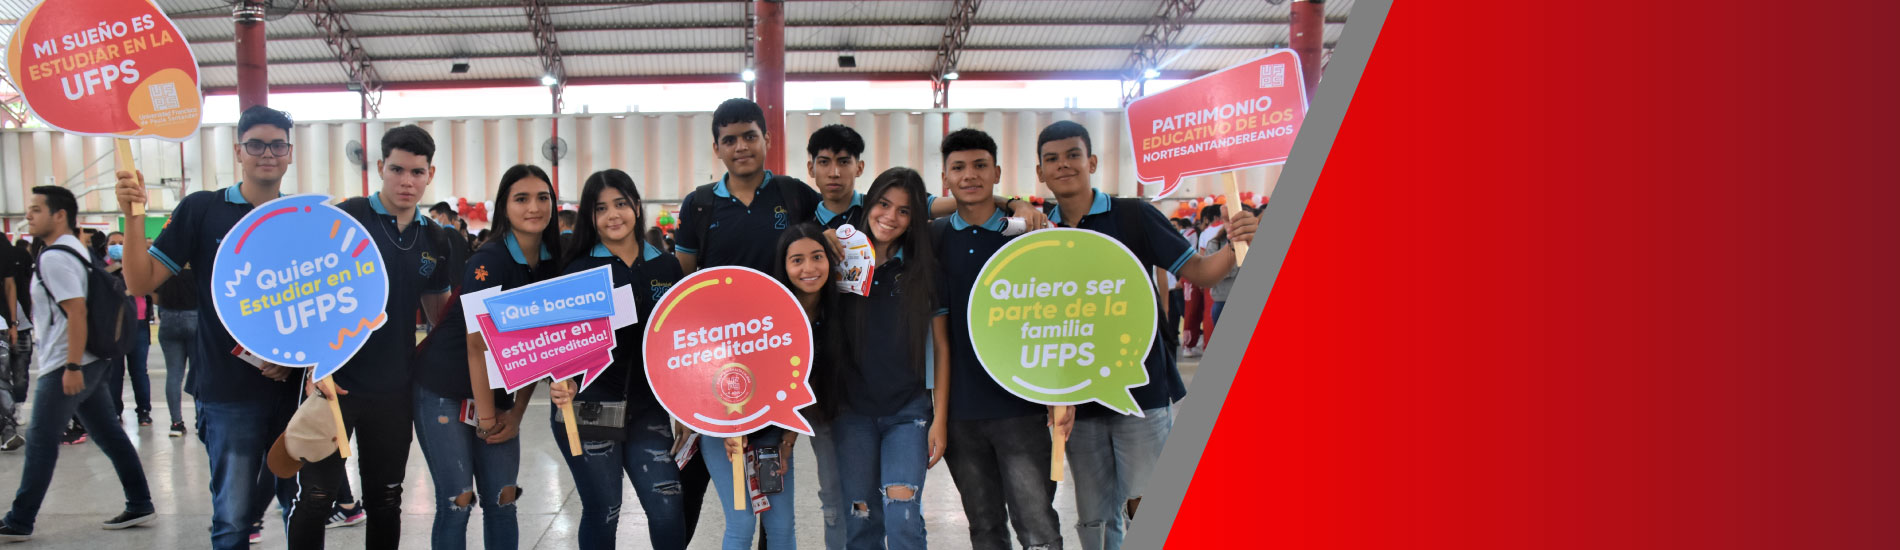 UFPS recibió a 109 colegios del área metropolitana de Cúcuta en la feria, “Buscando Carrera”  